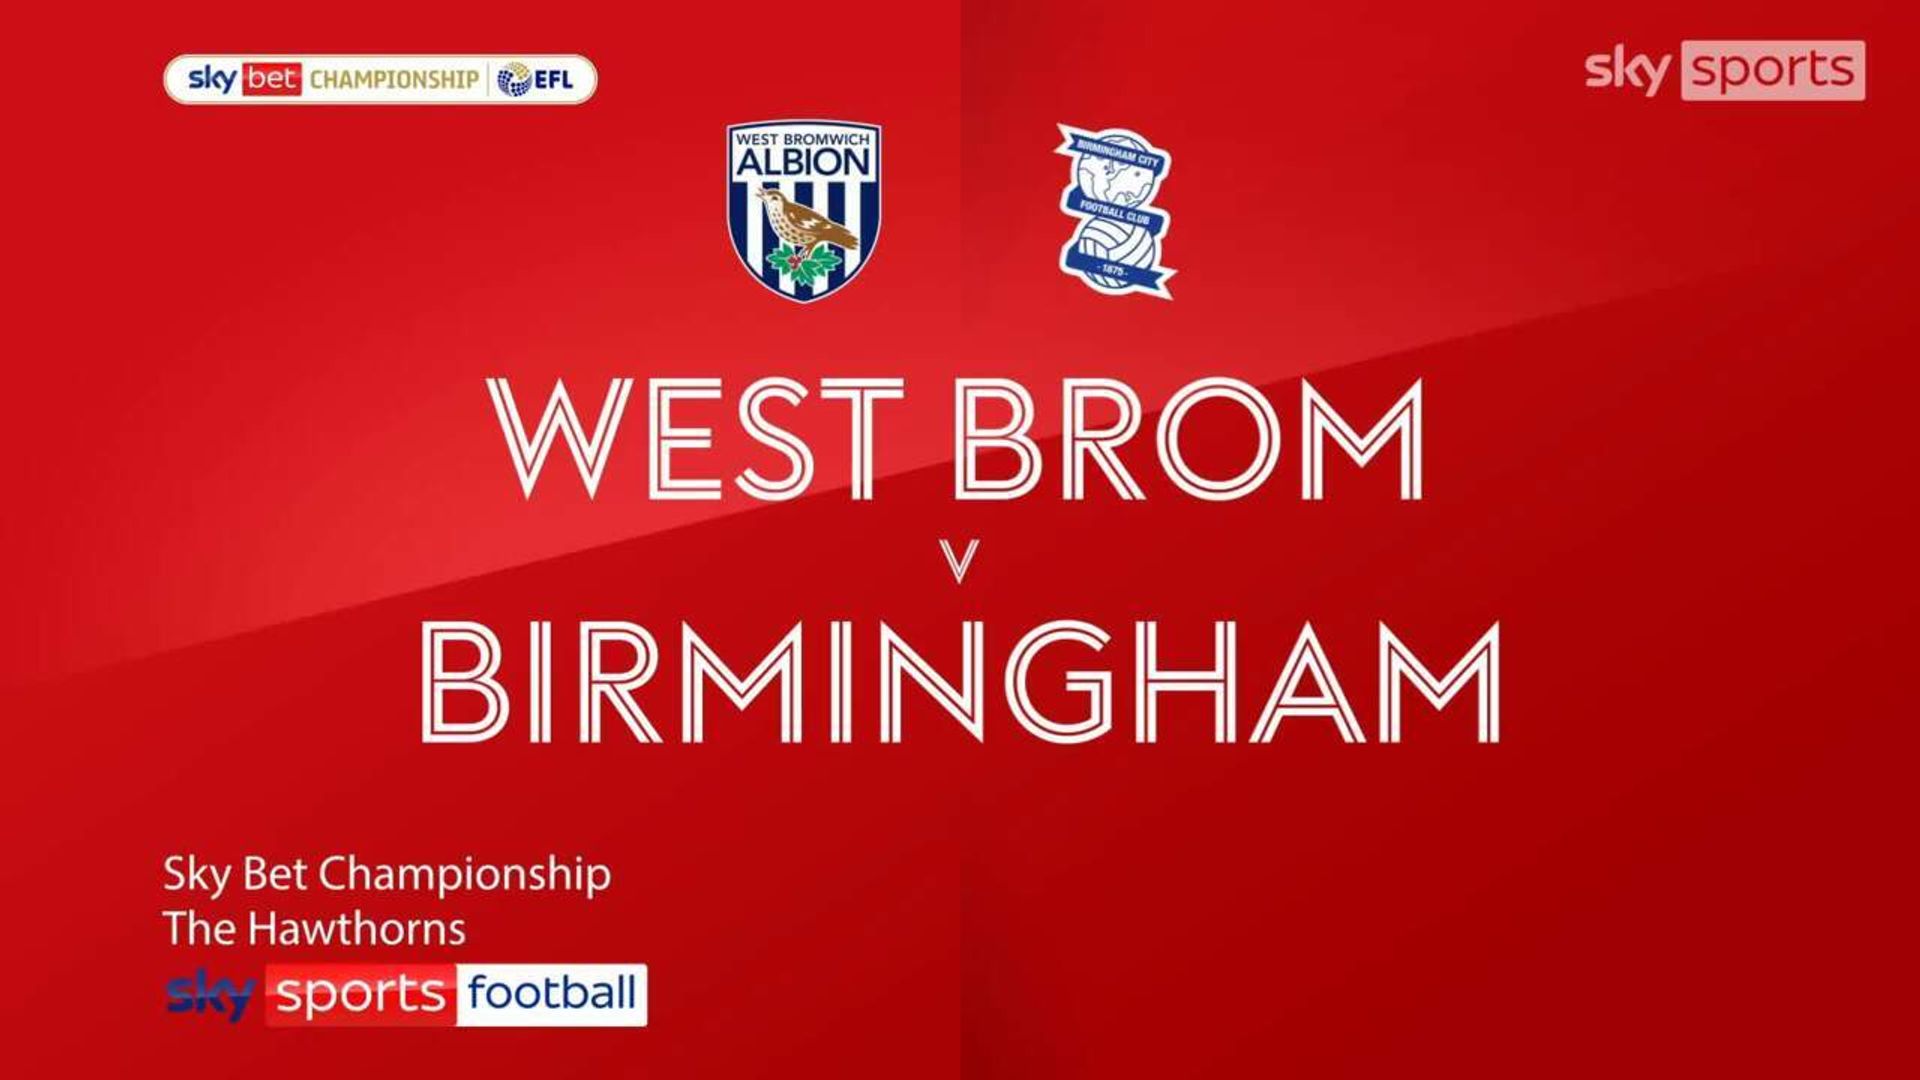 West Brom 1-0 Birmingham